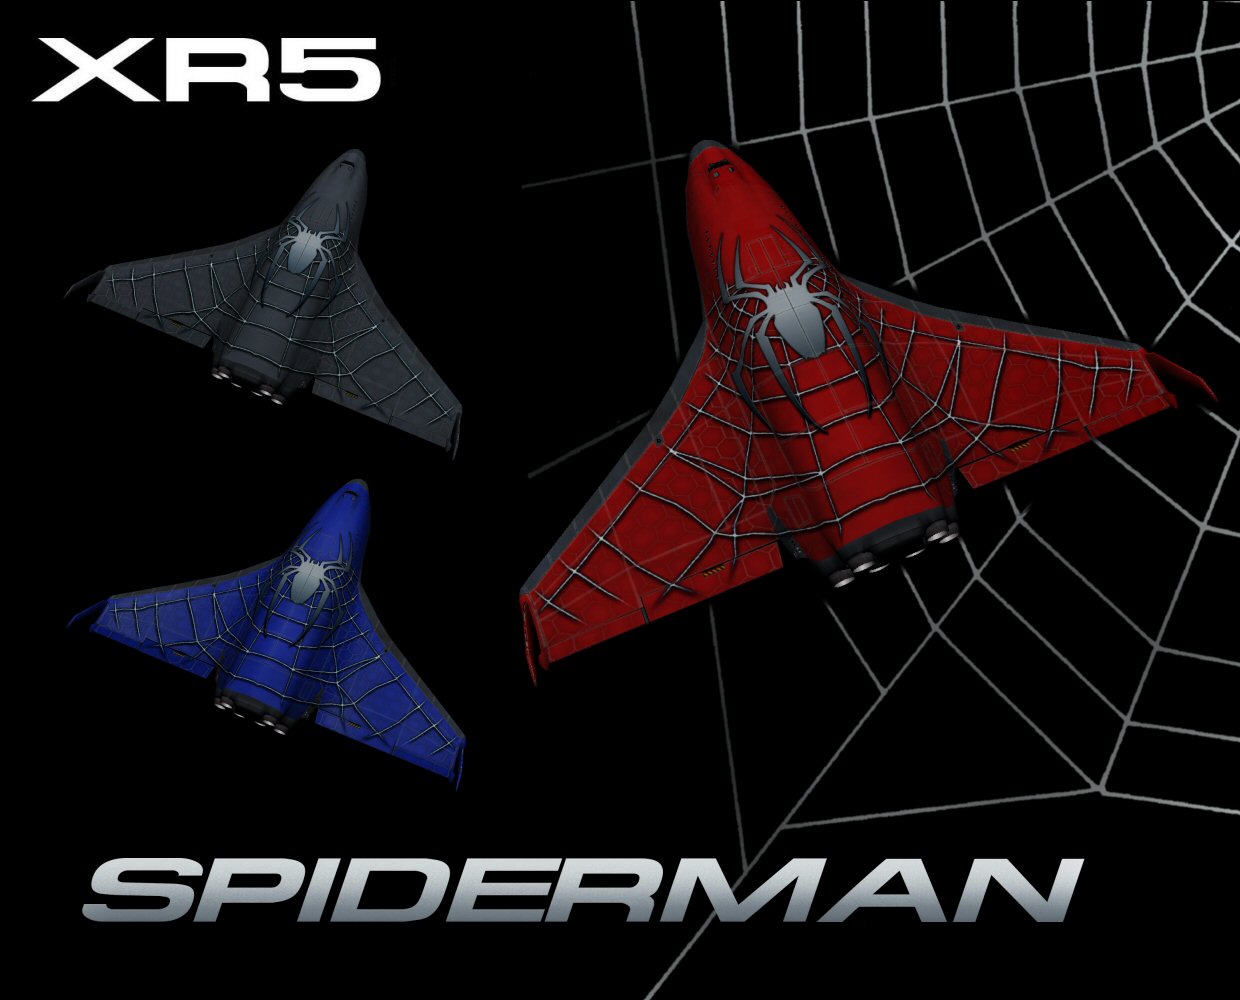 XR5 Spiderman Pic.jpg